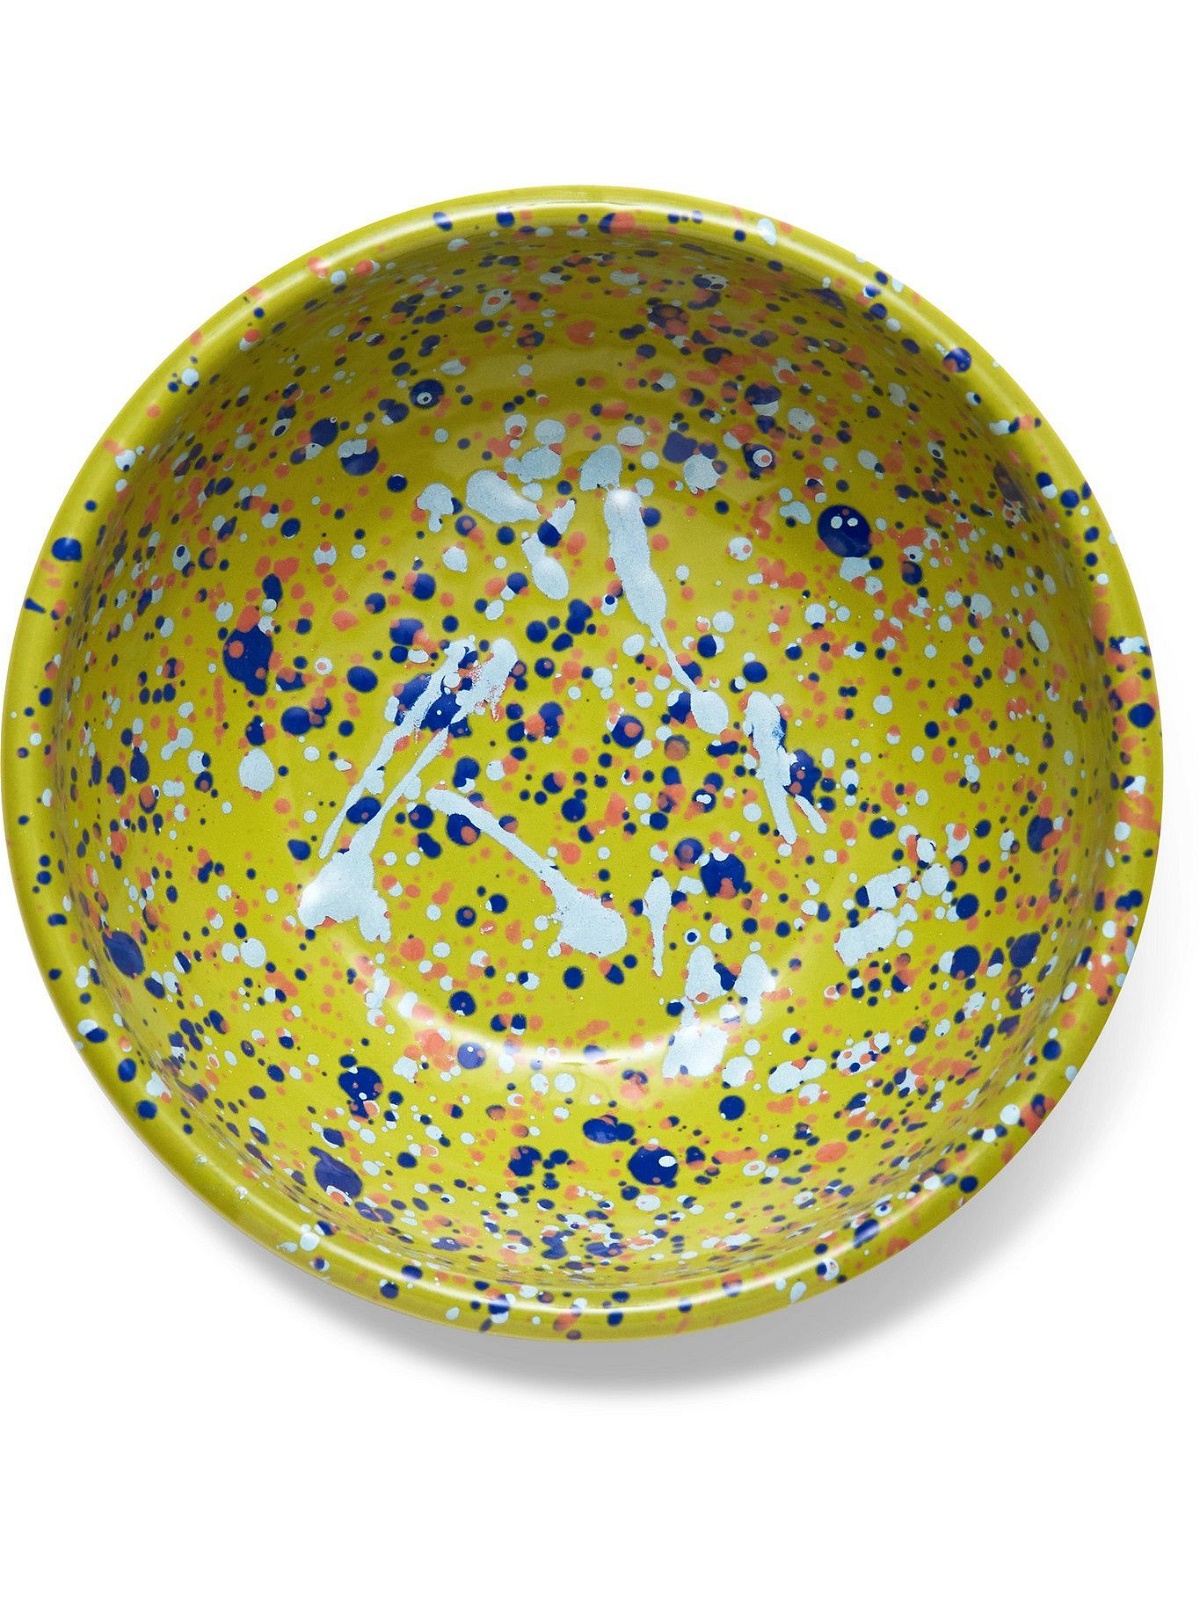 BORNN - Island Breeze Splattered Enamelware Bowl, 16cm